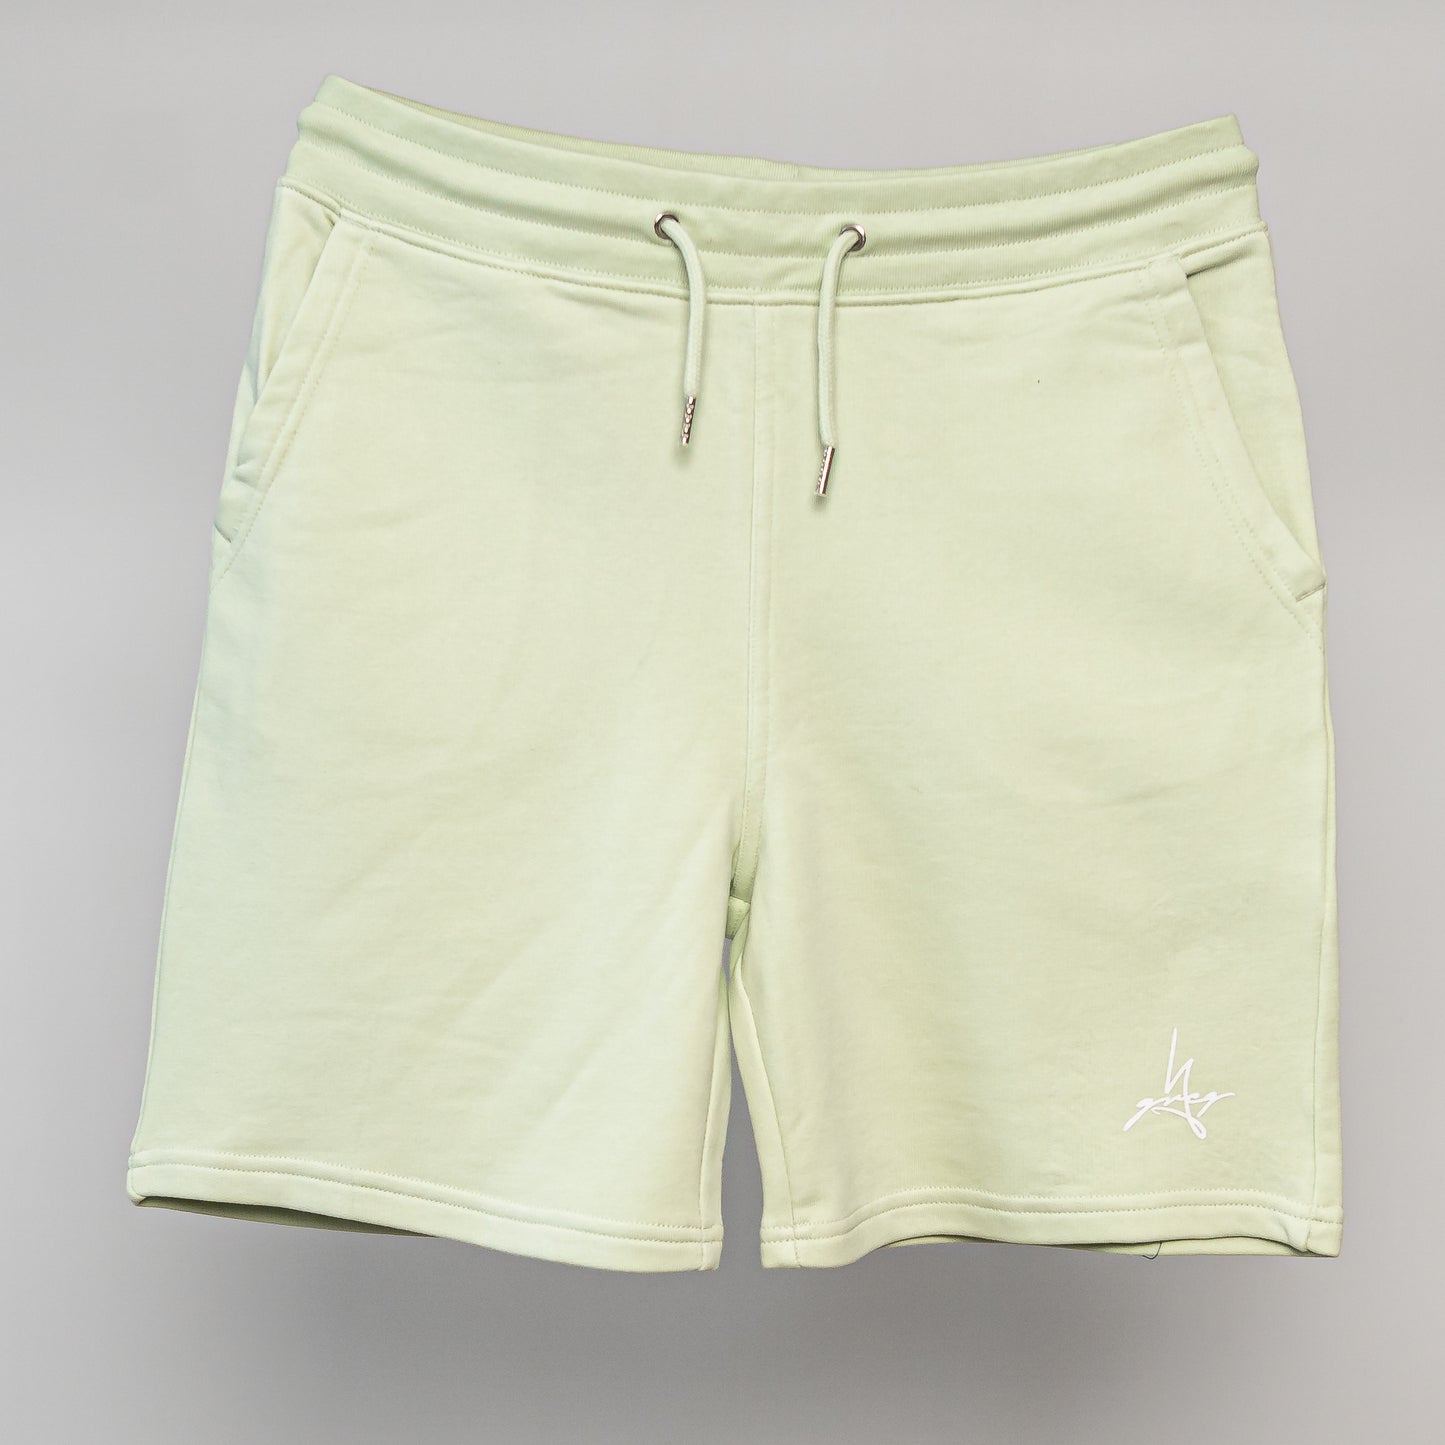 YGREG 'Authentic' Stem Green Shorts